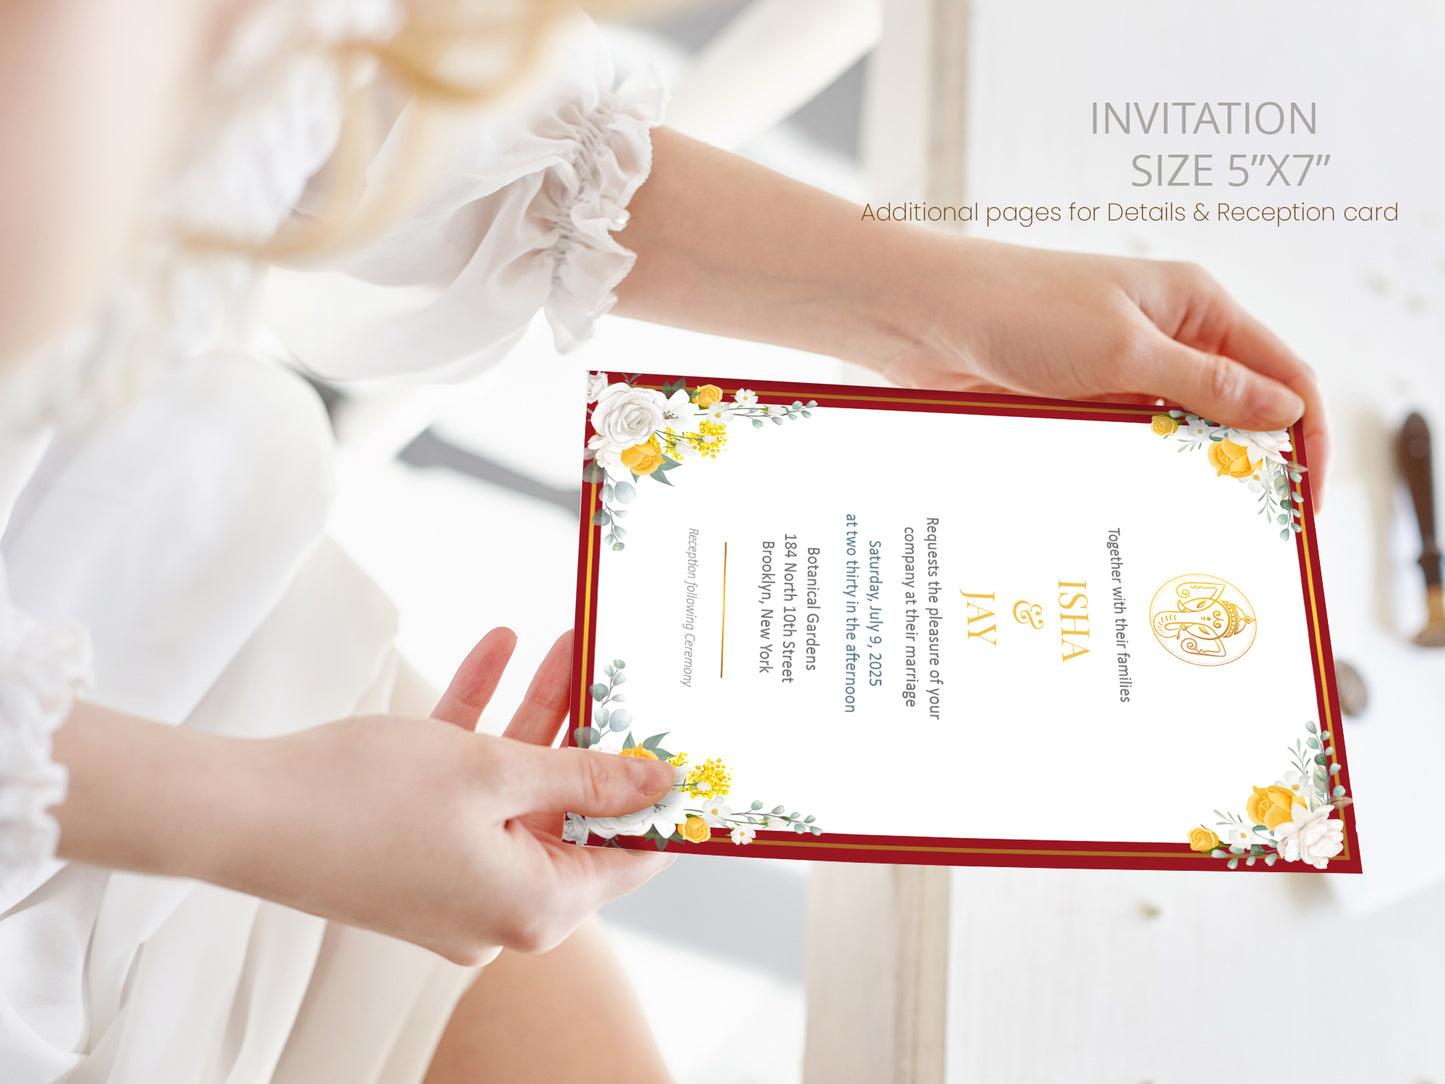 Cute Indian/Hindu wedding invite, Haldi/Mehndi/Sangeet, Customize template #idwc210201